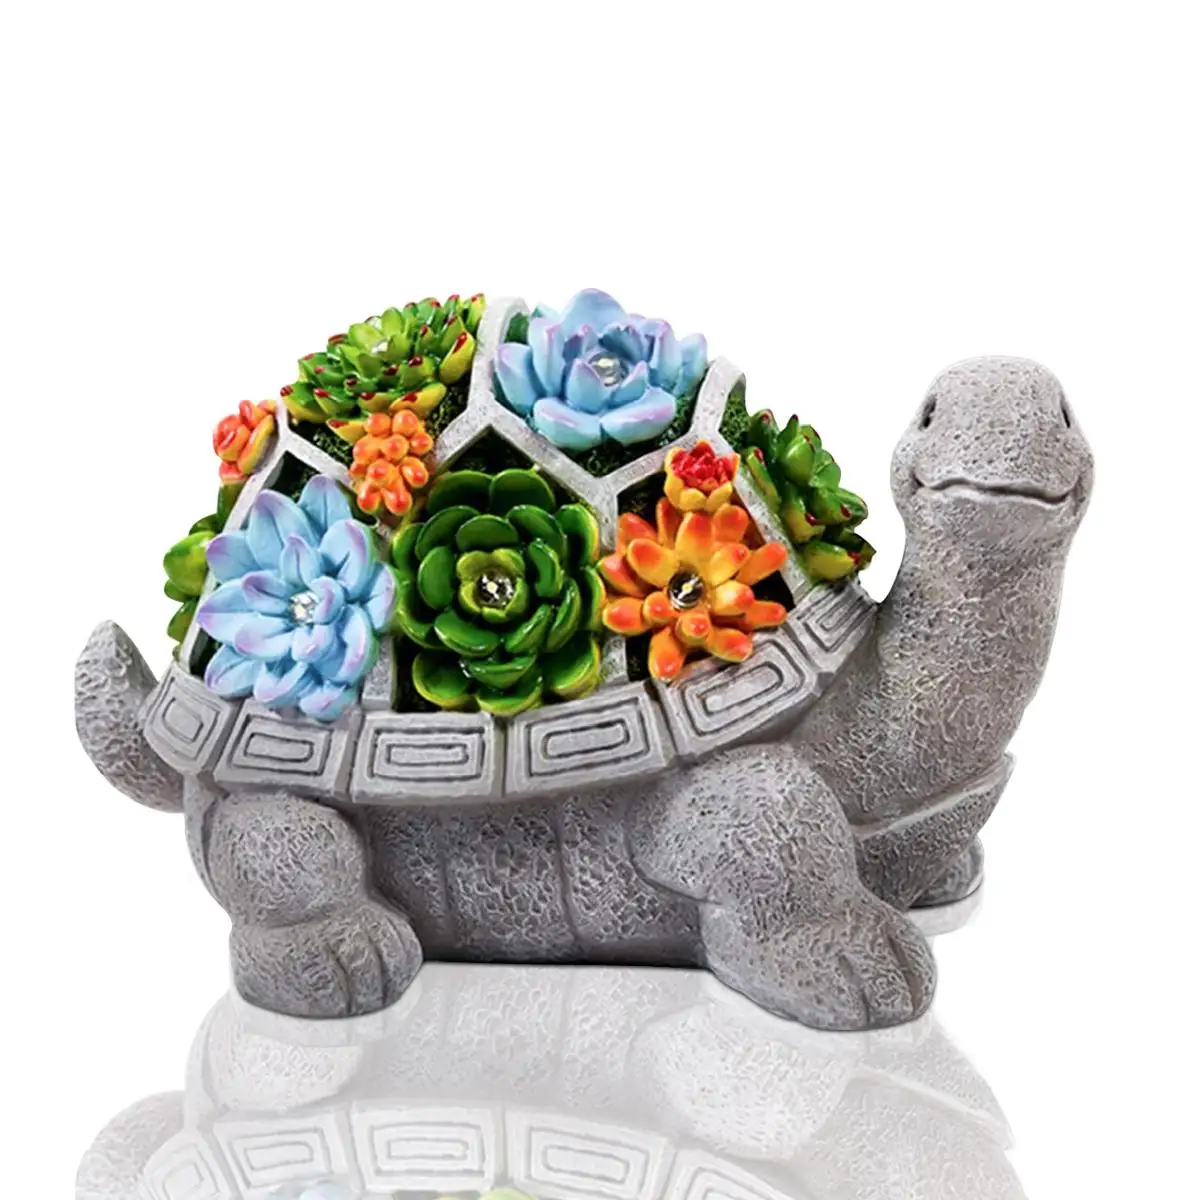 Goodeco Solar Garden Statue Turtle Outdoor Tortoise Figurine Decor 